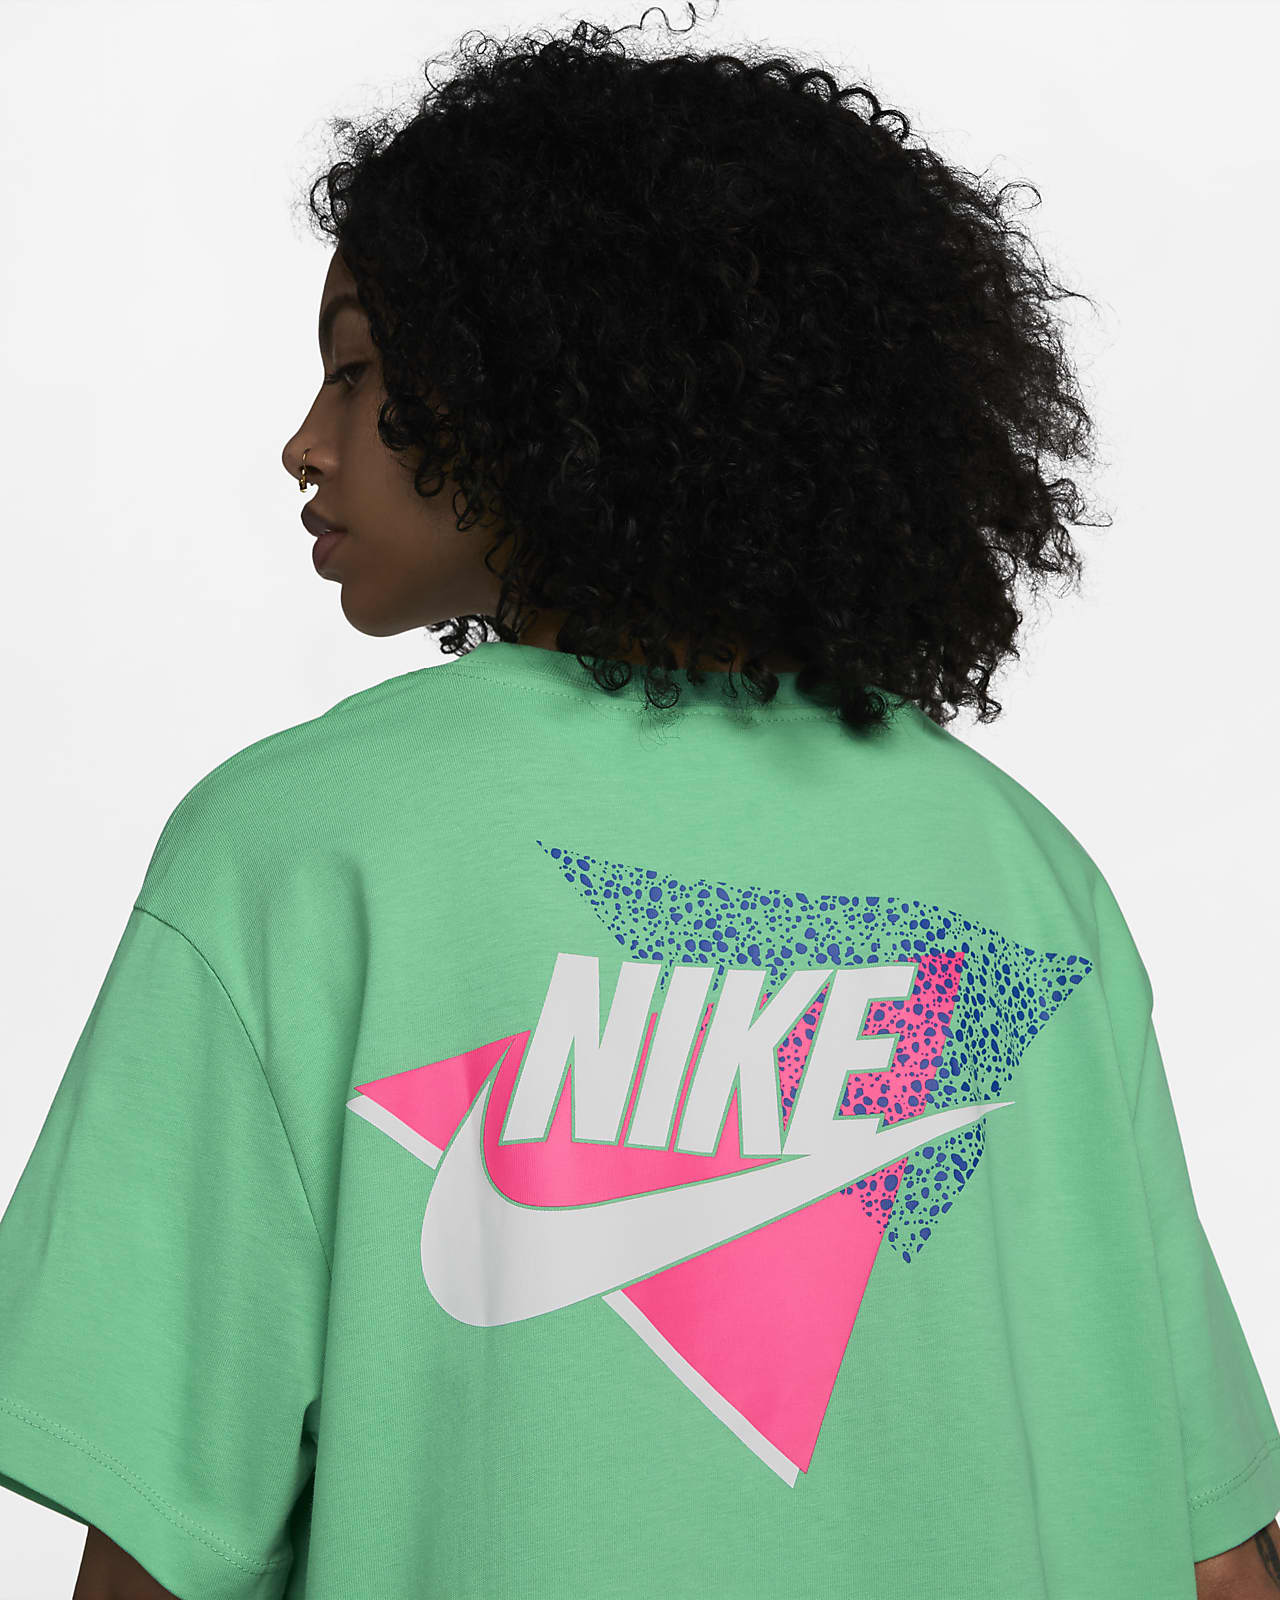 Nike Sportswear Women's T-Shirt. Nike CH